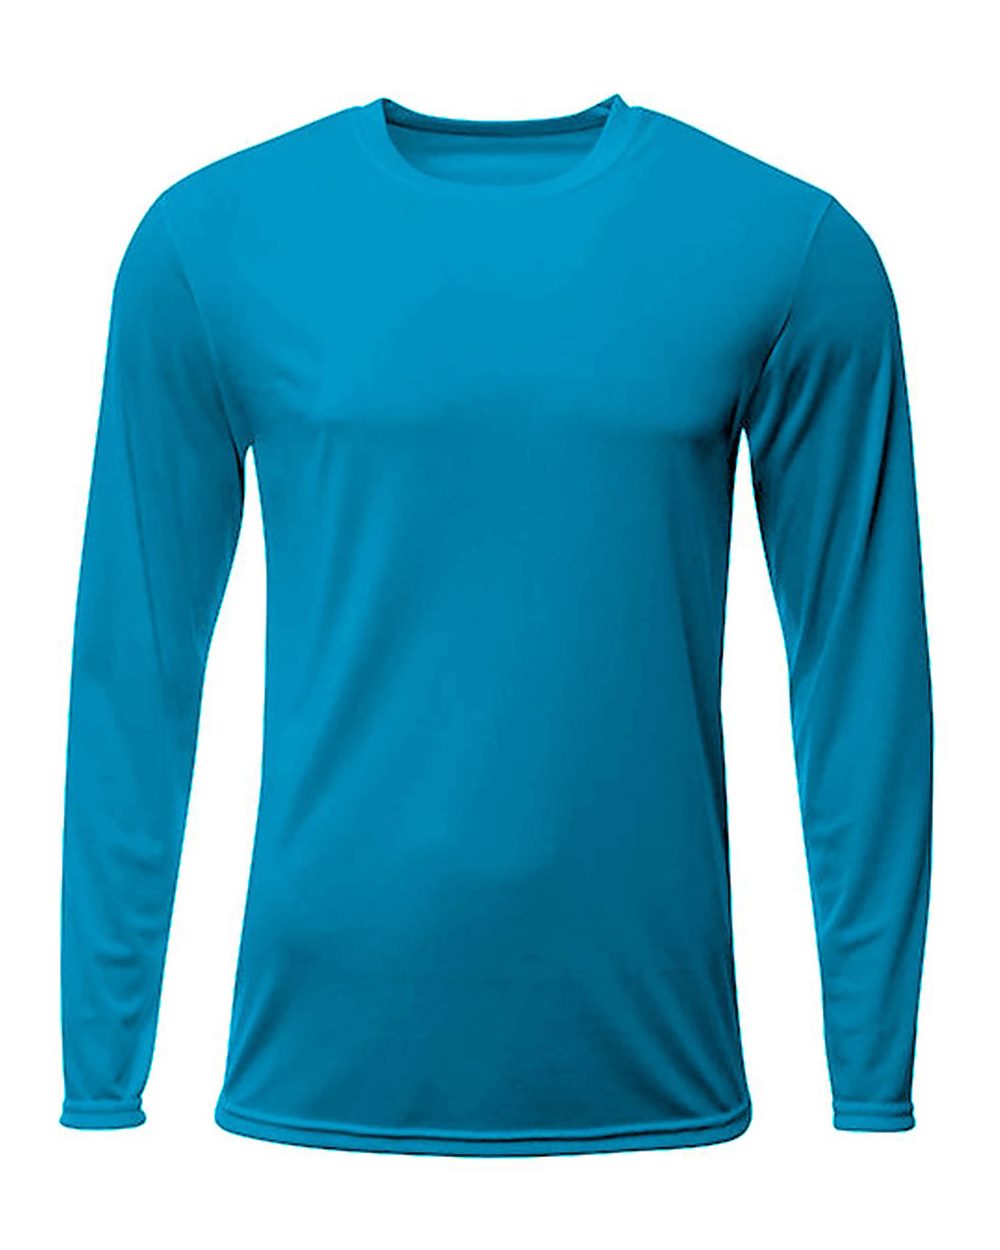 A4 N3425 - Sprint Long Sleeve T-Shirt